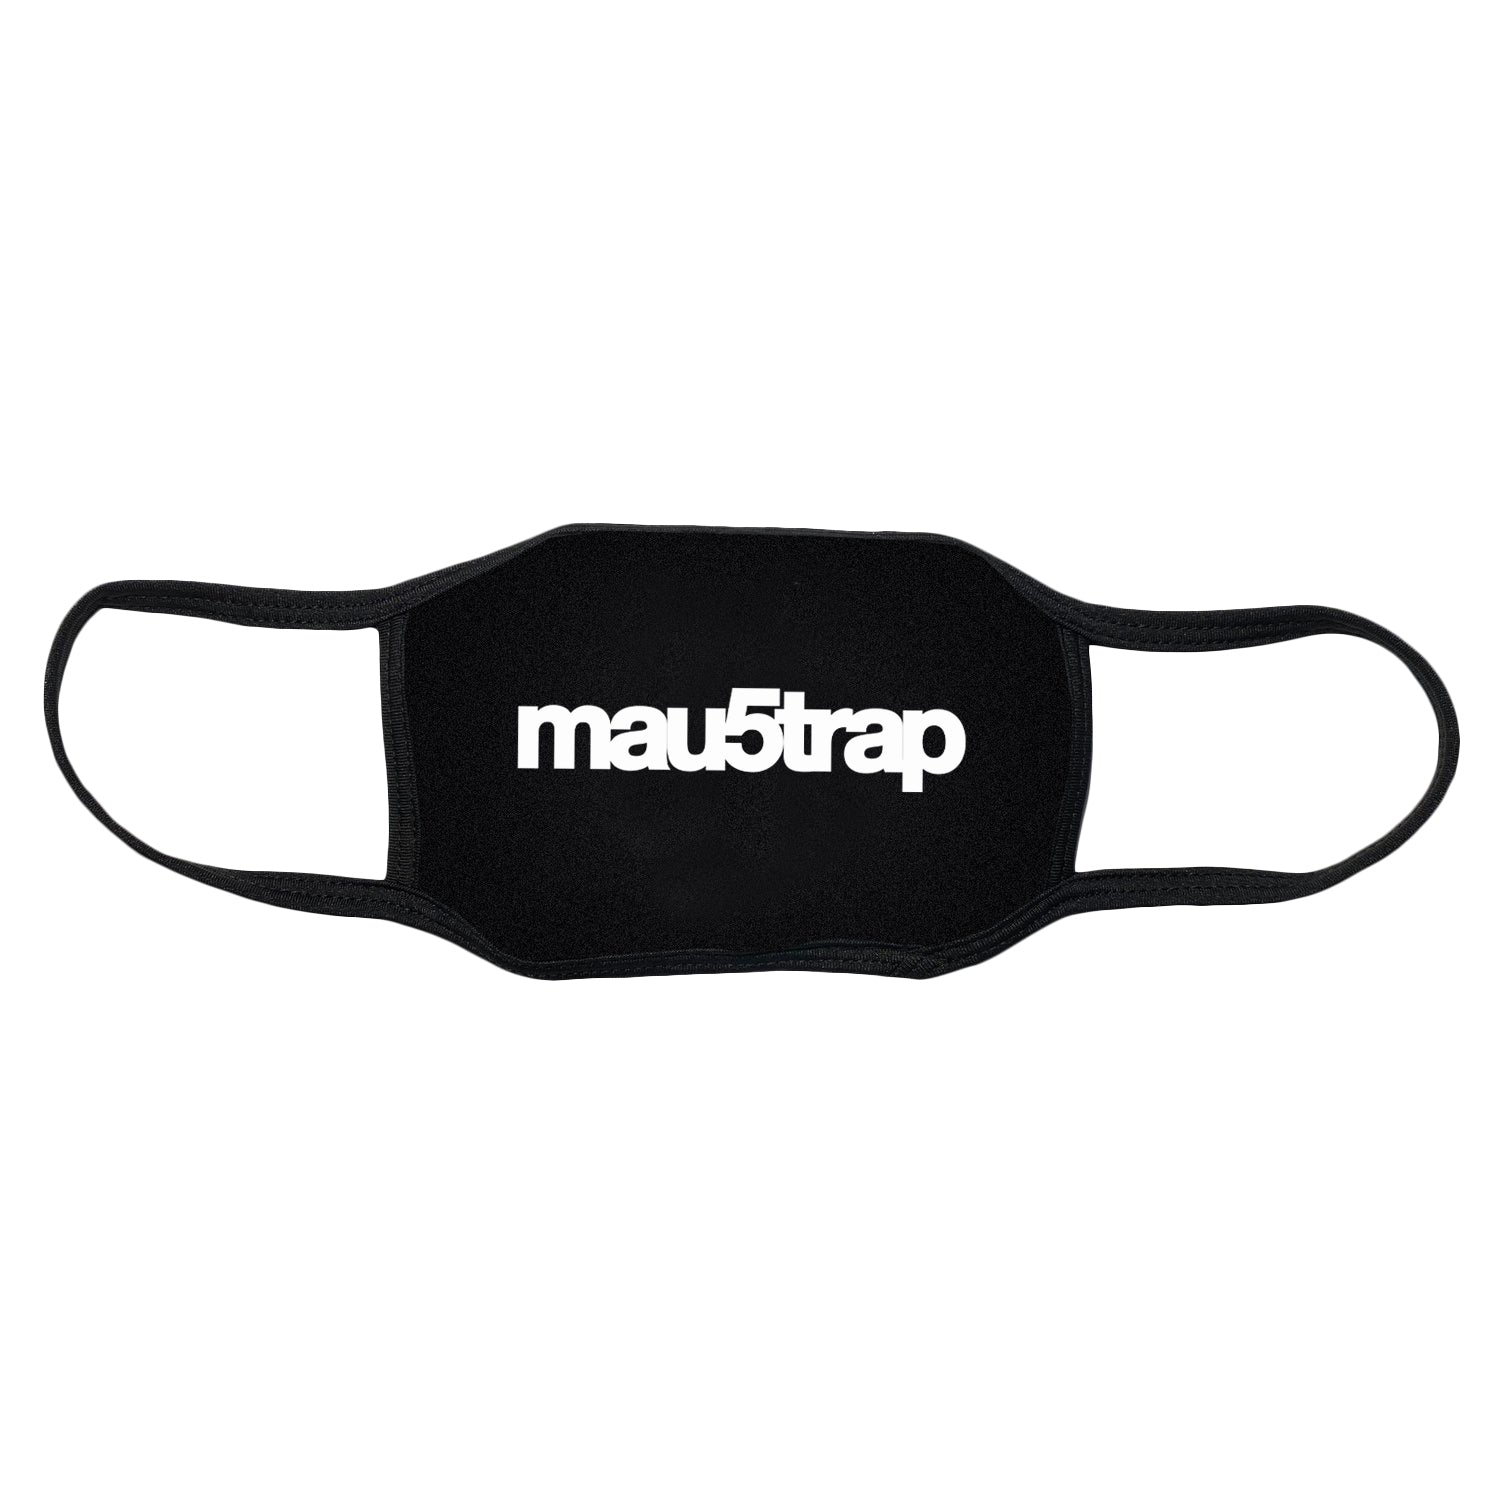 mau5trap - Logo Face Mask